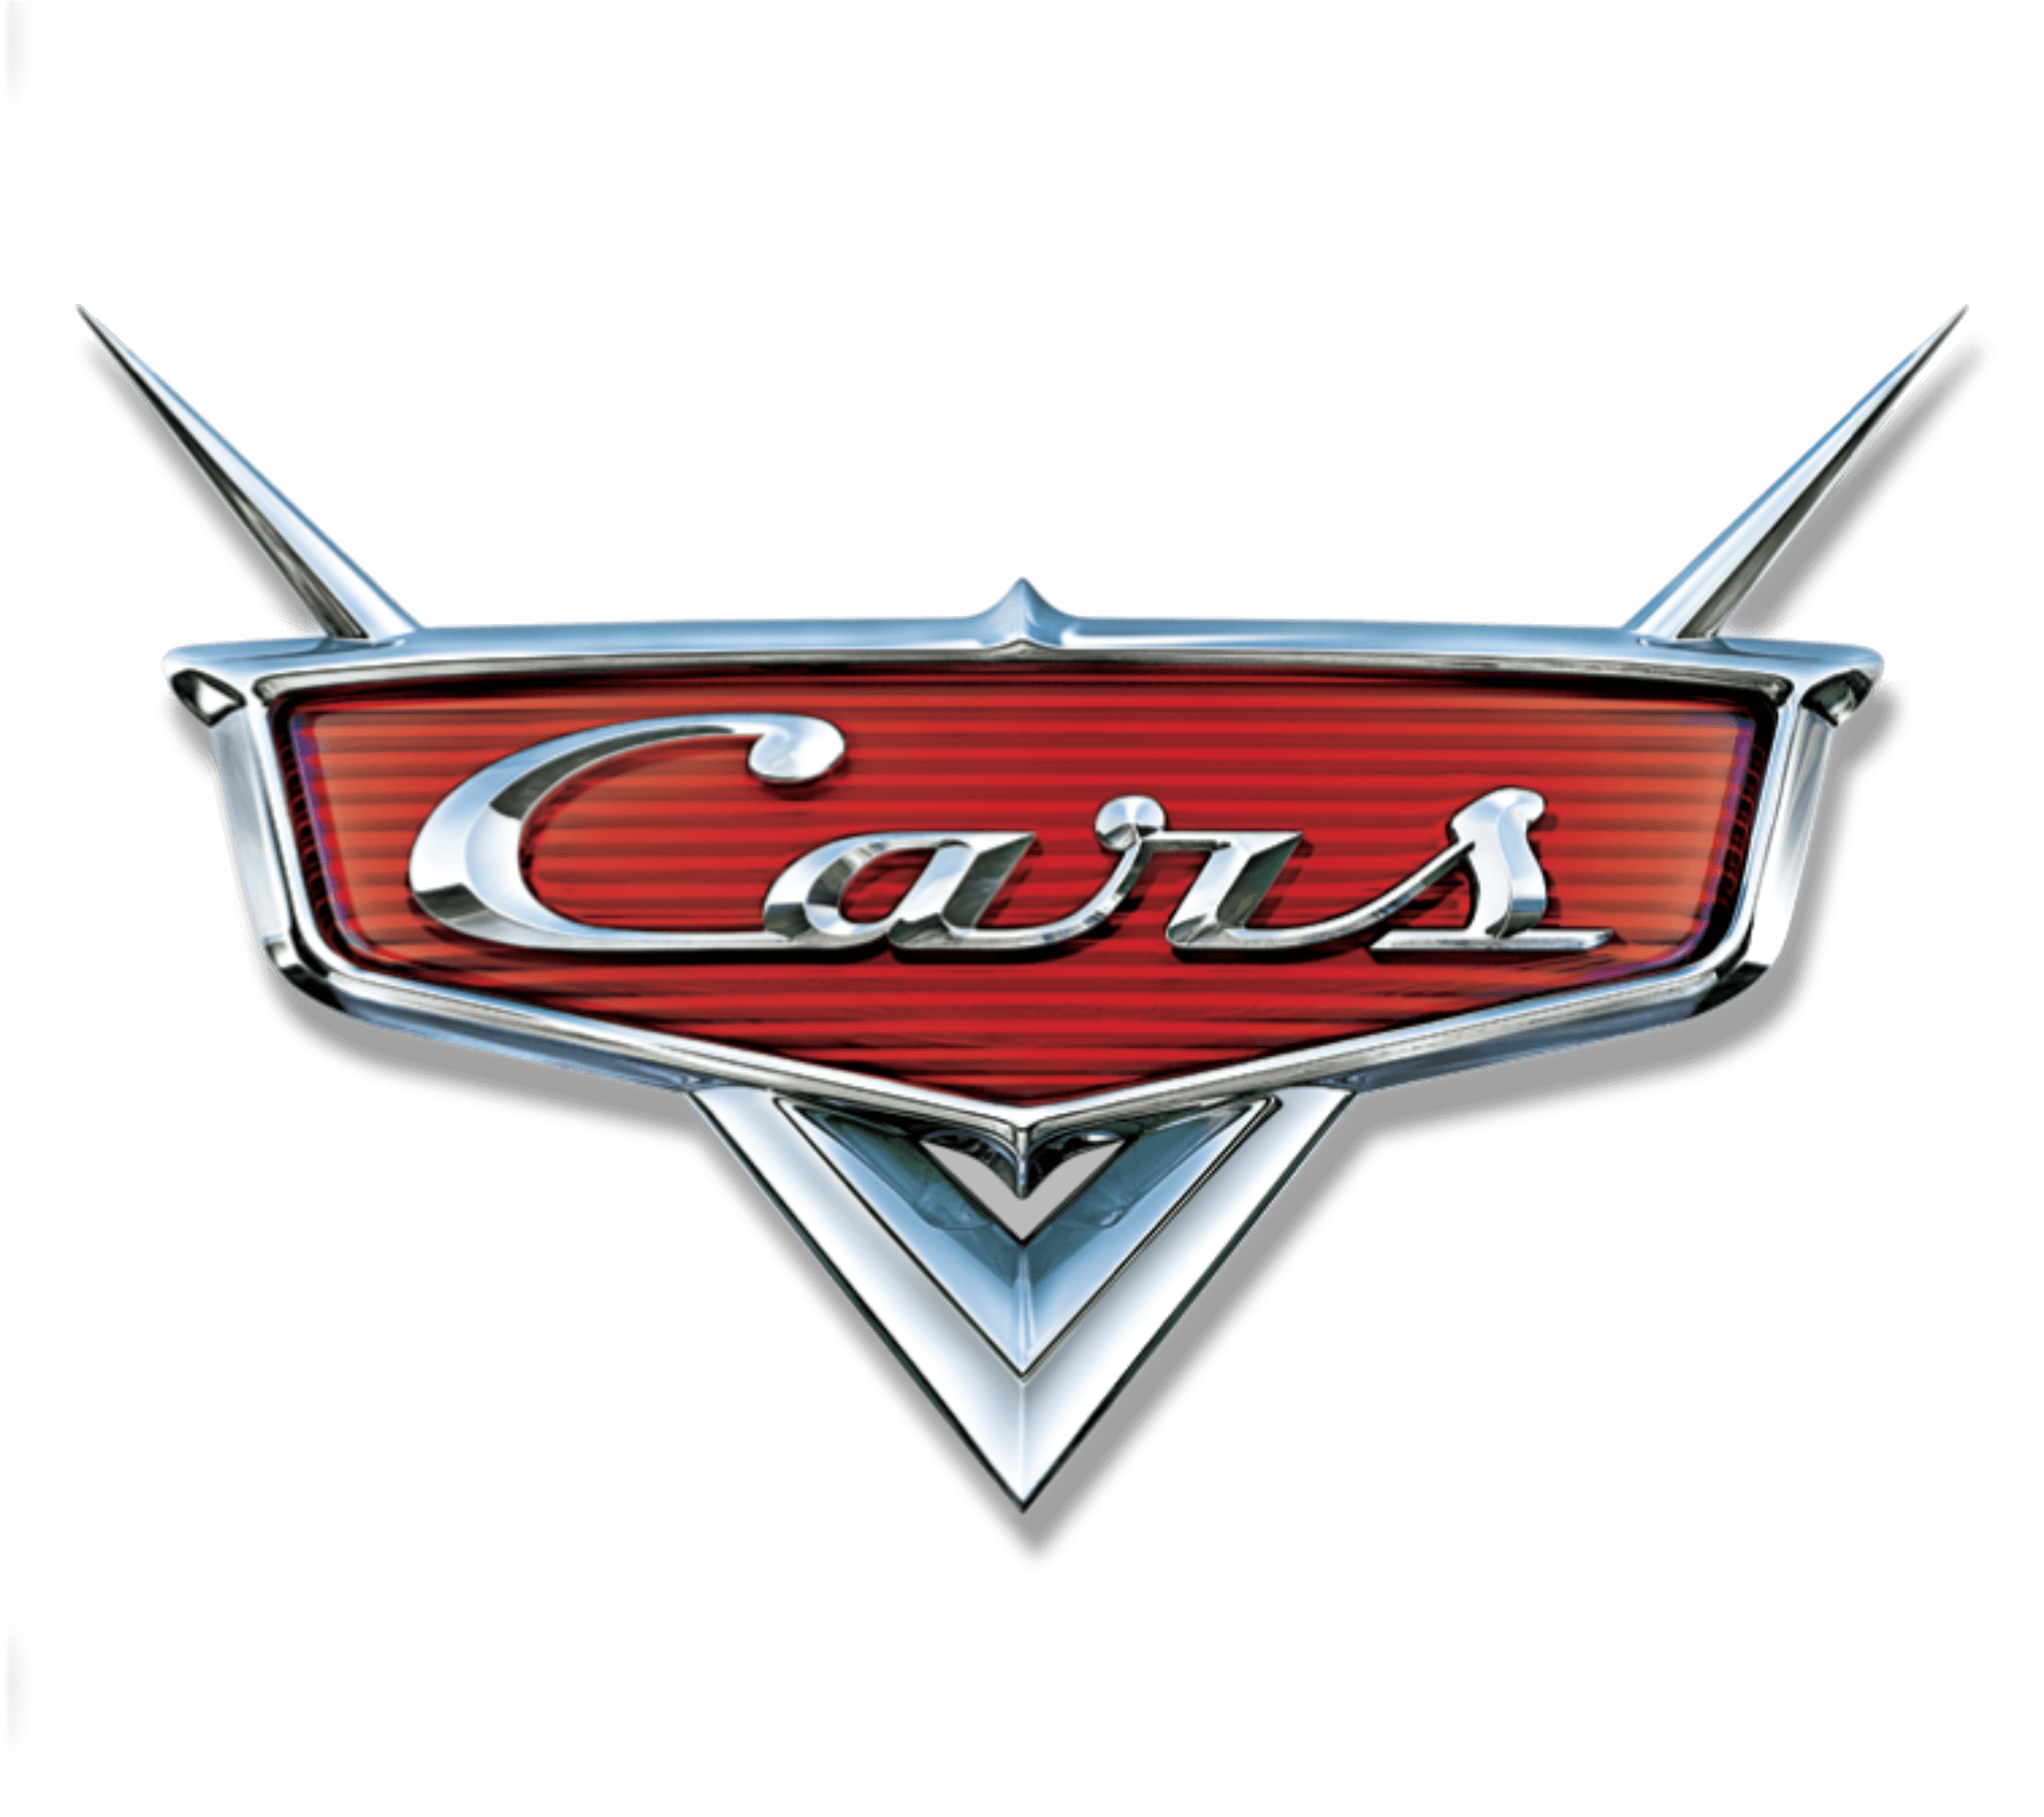 Disney Pixar Cars Logo - Disney and Pixar Cars Logo PNG Transparent & SVG Vector - Freebie Supply